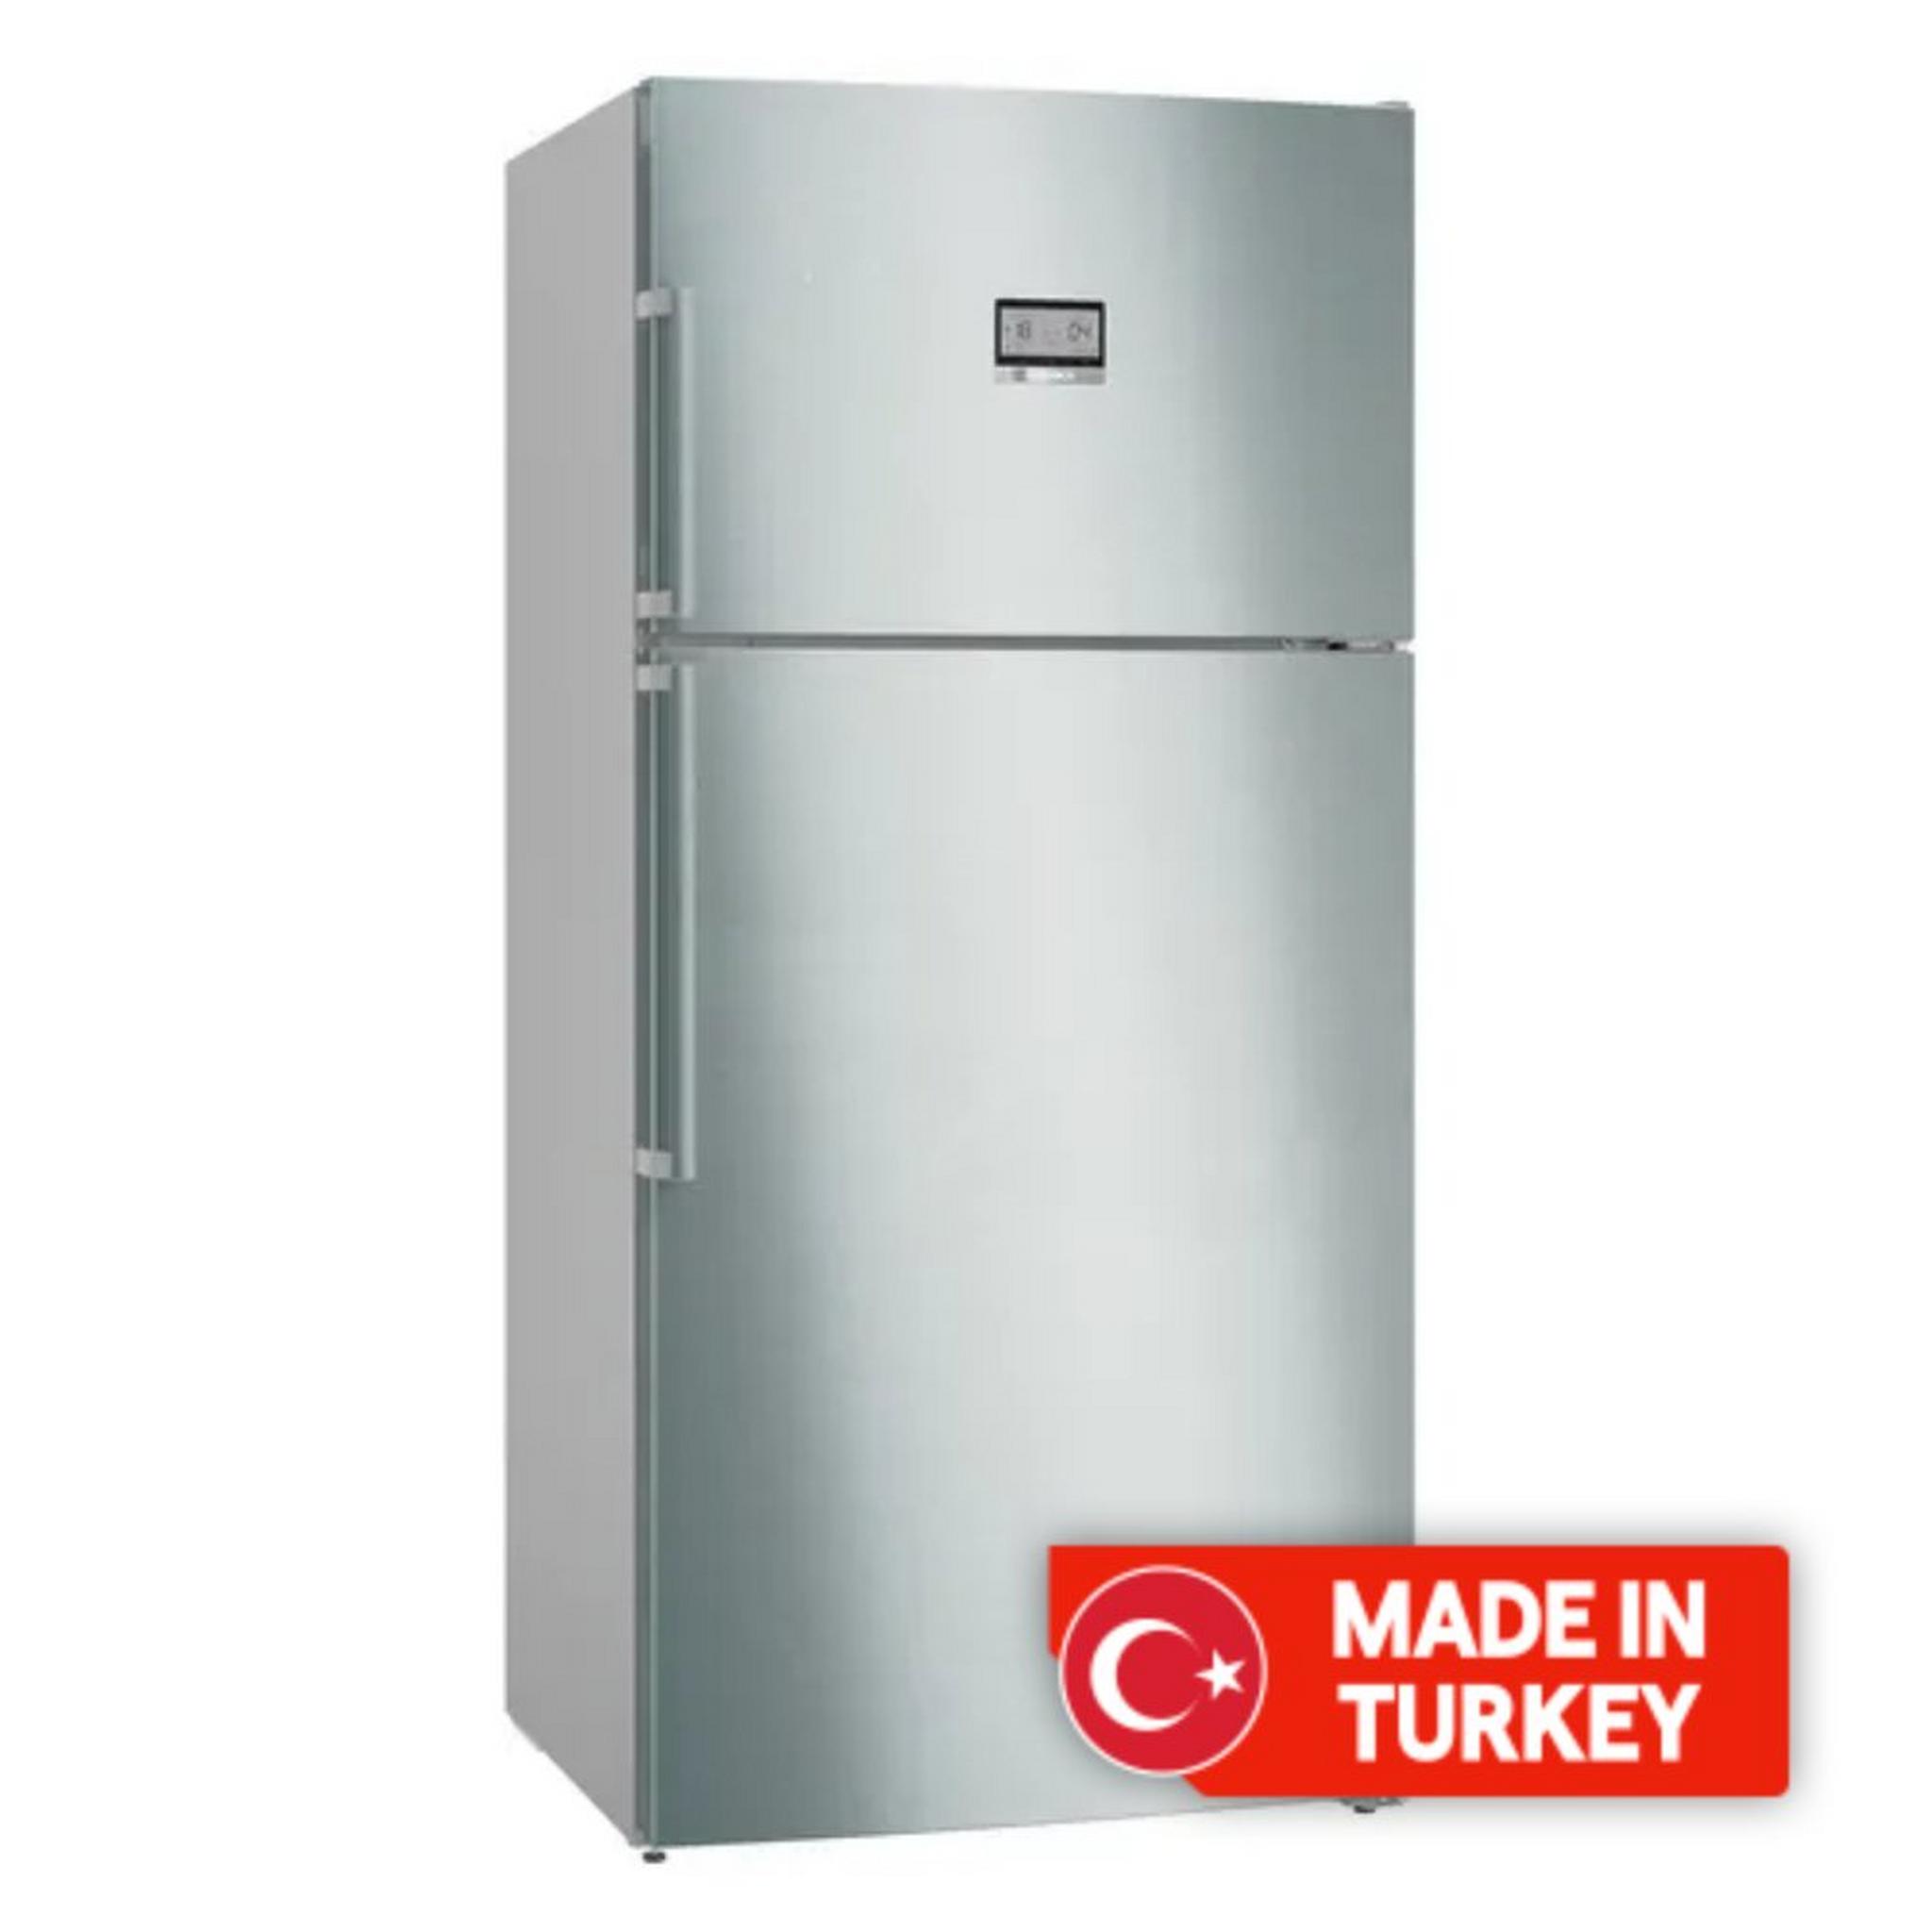 BOSCH Series 6 Top Mount Refrigerator, 24 Cft, Capacity 687Ltr, KDN86HI30M – Silver